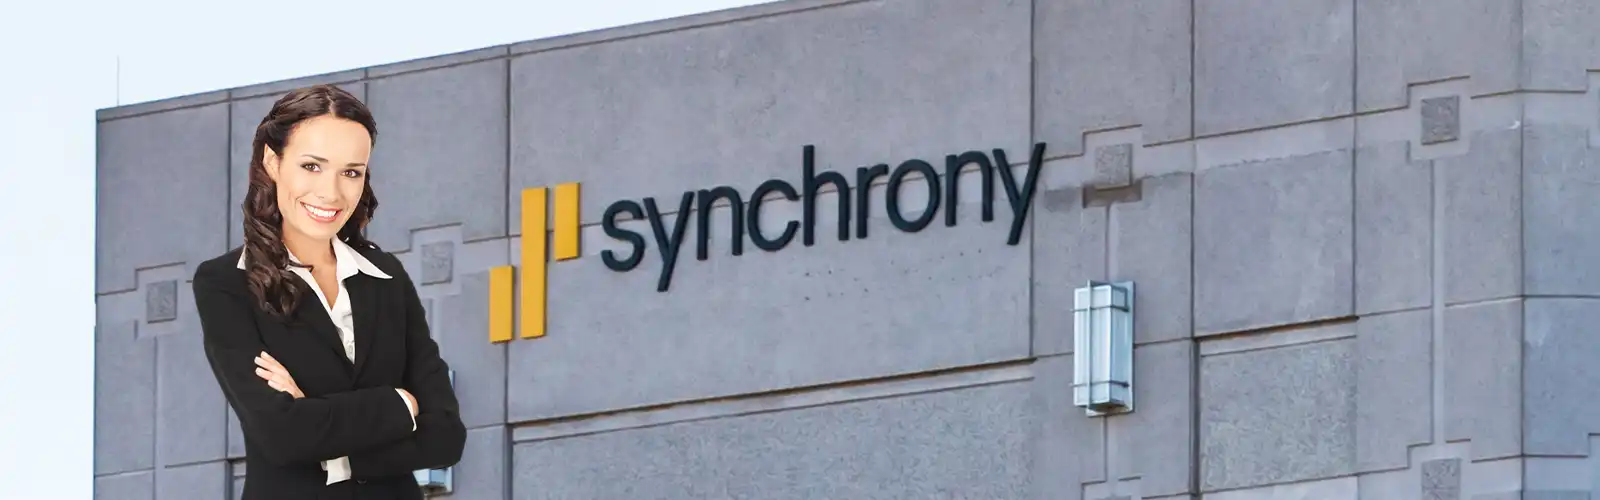 Synchrony-Bank-Customer-Service